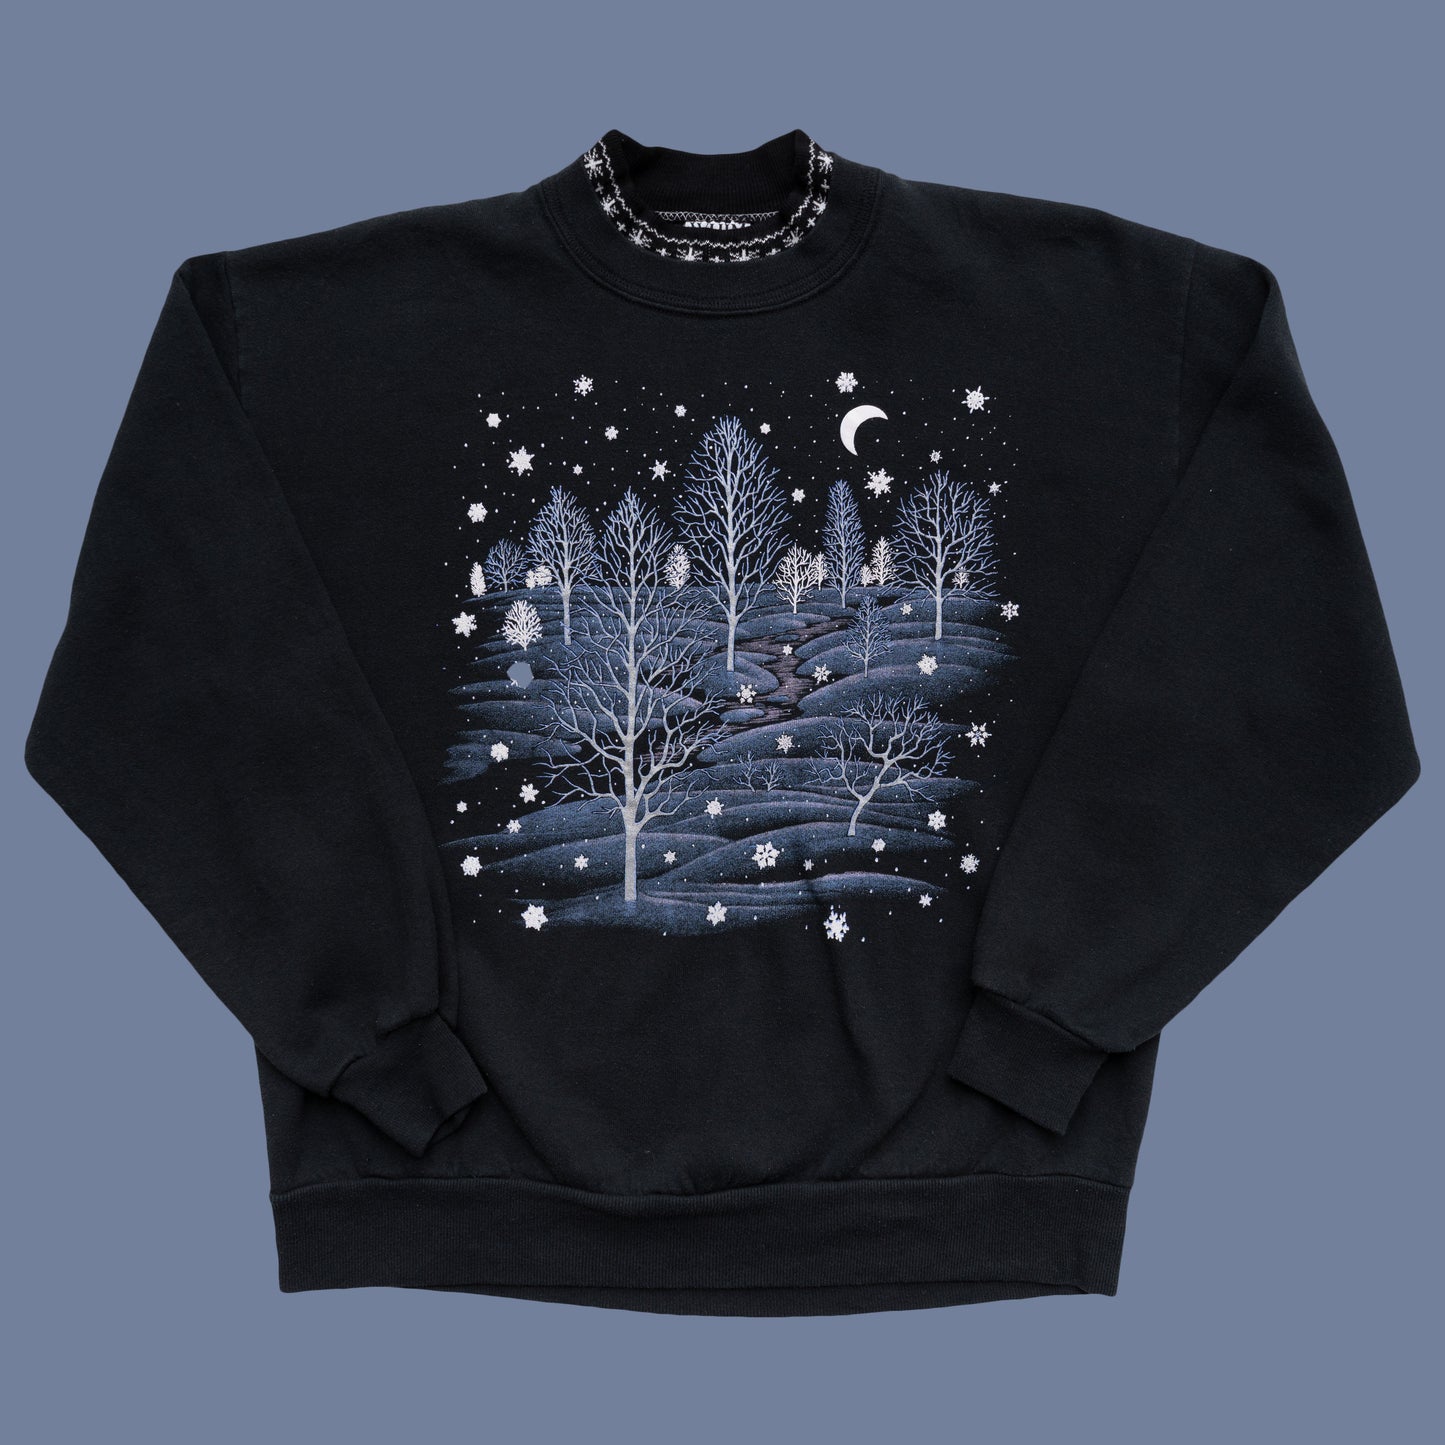 Winter Scenery Sweater, L